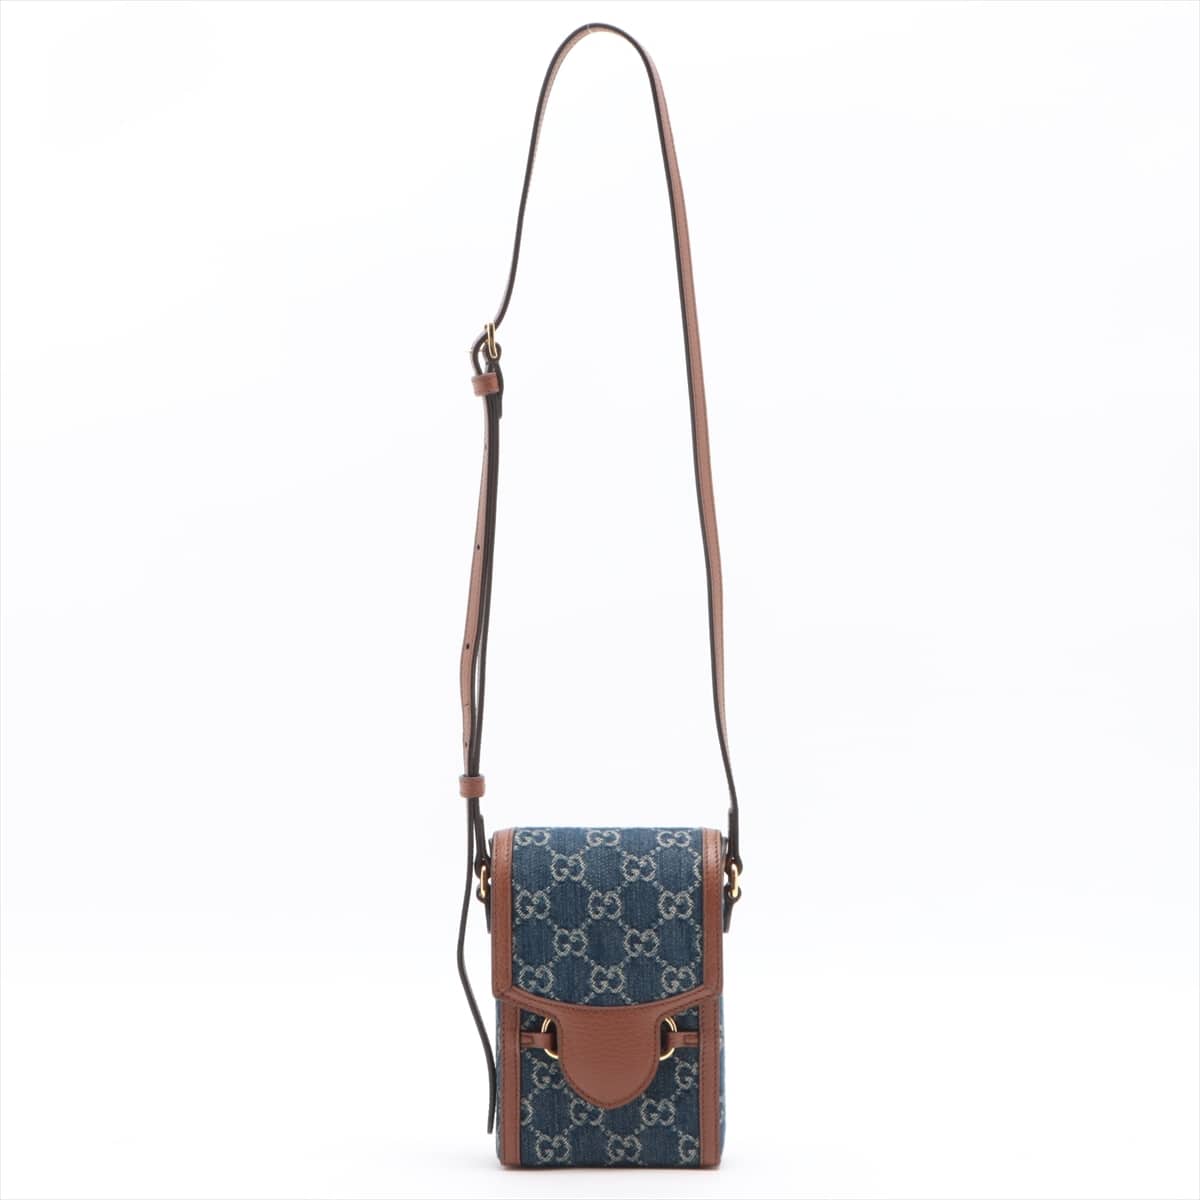 Gucci Horsebit Denim & leather Shoulder bag blue x brown 625615